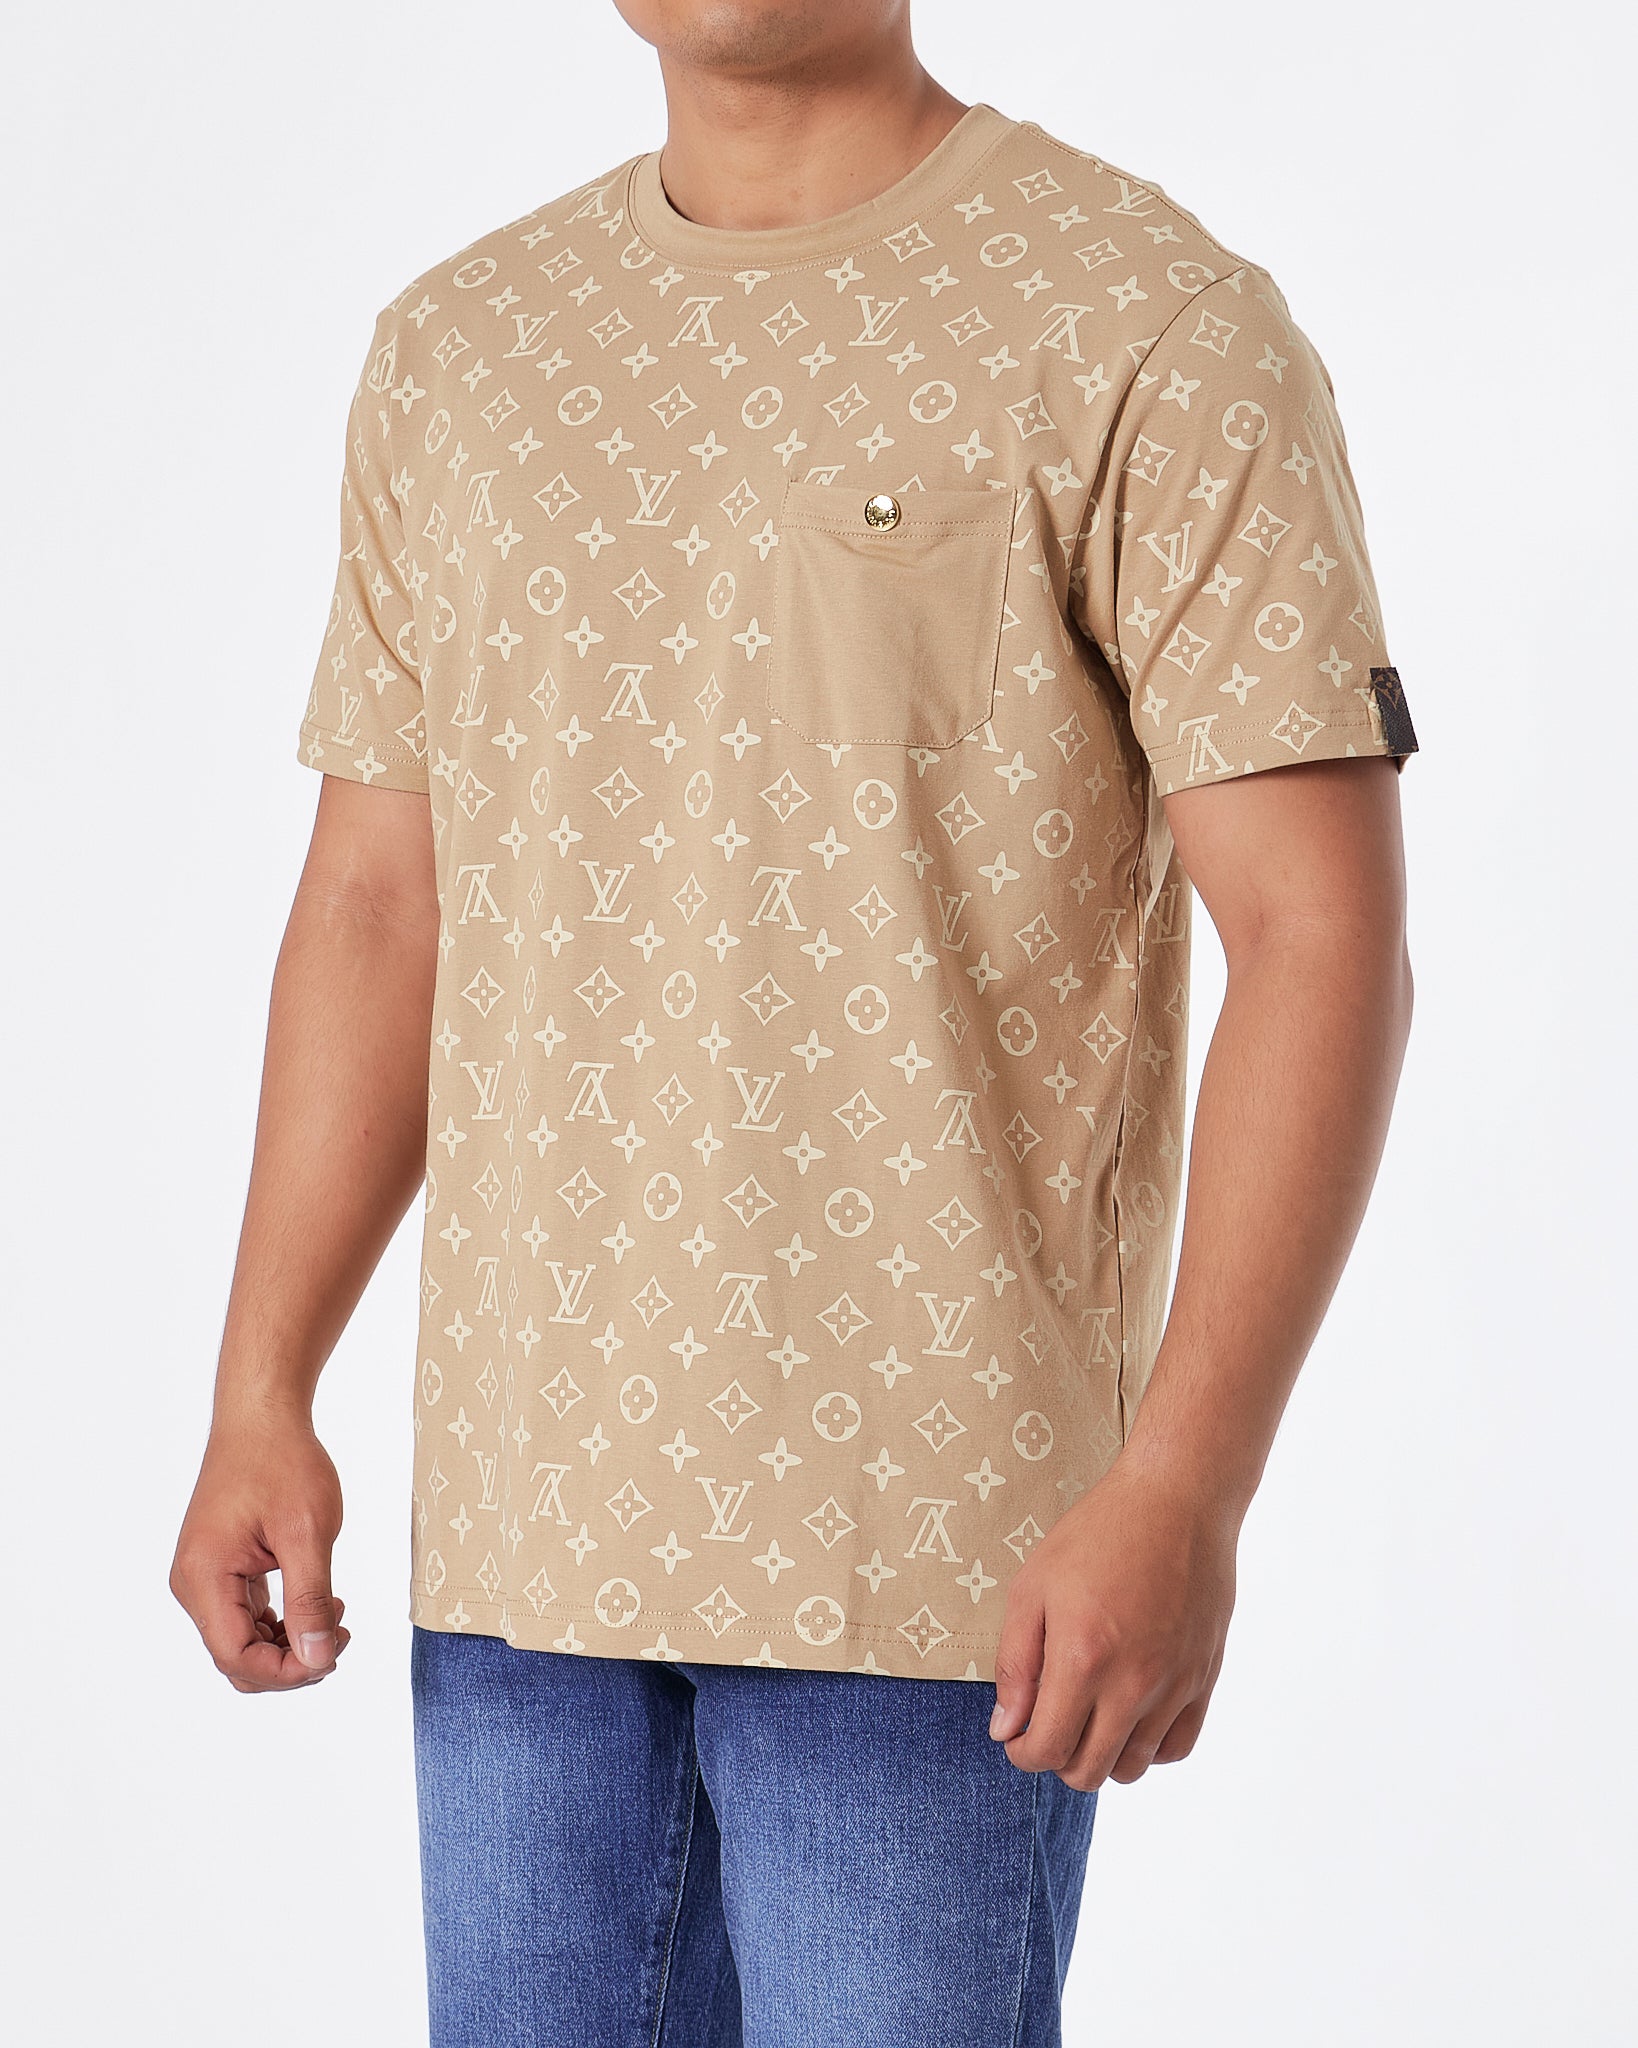 LV Monogram Over Printed Men Cream  T-Shirt 24.90